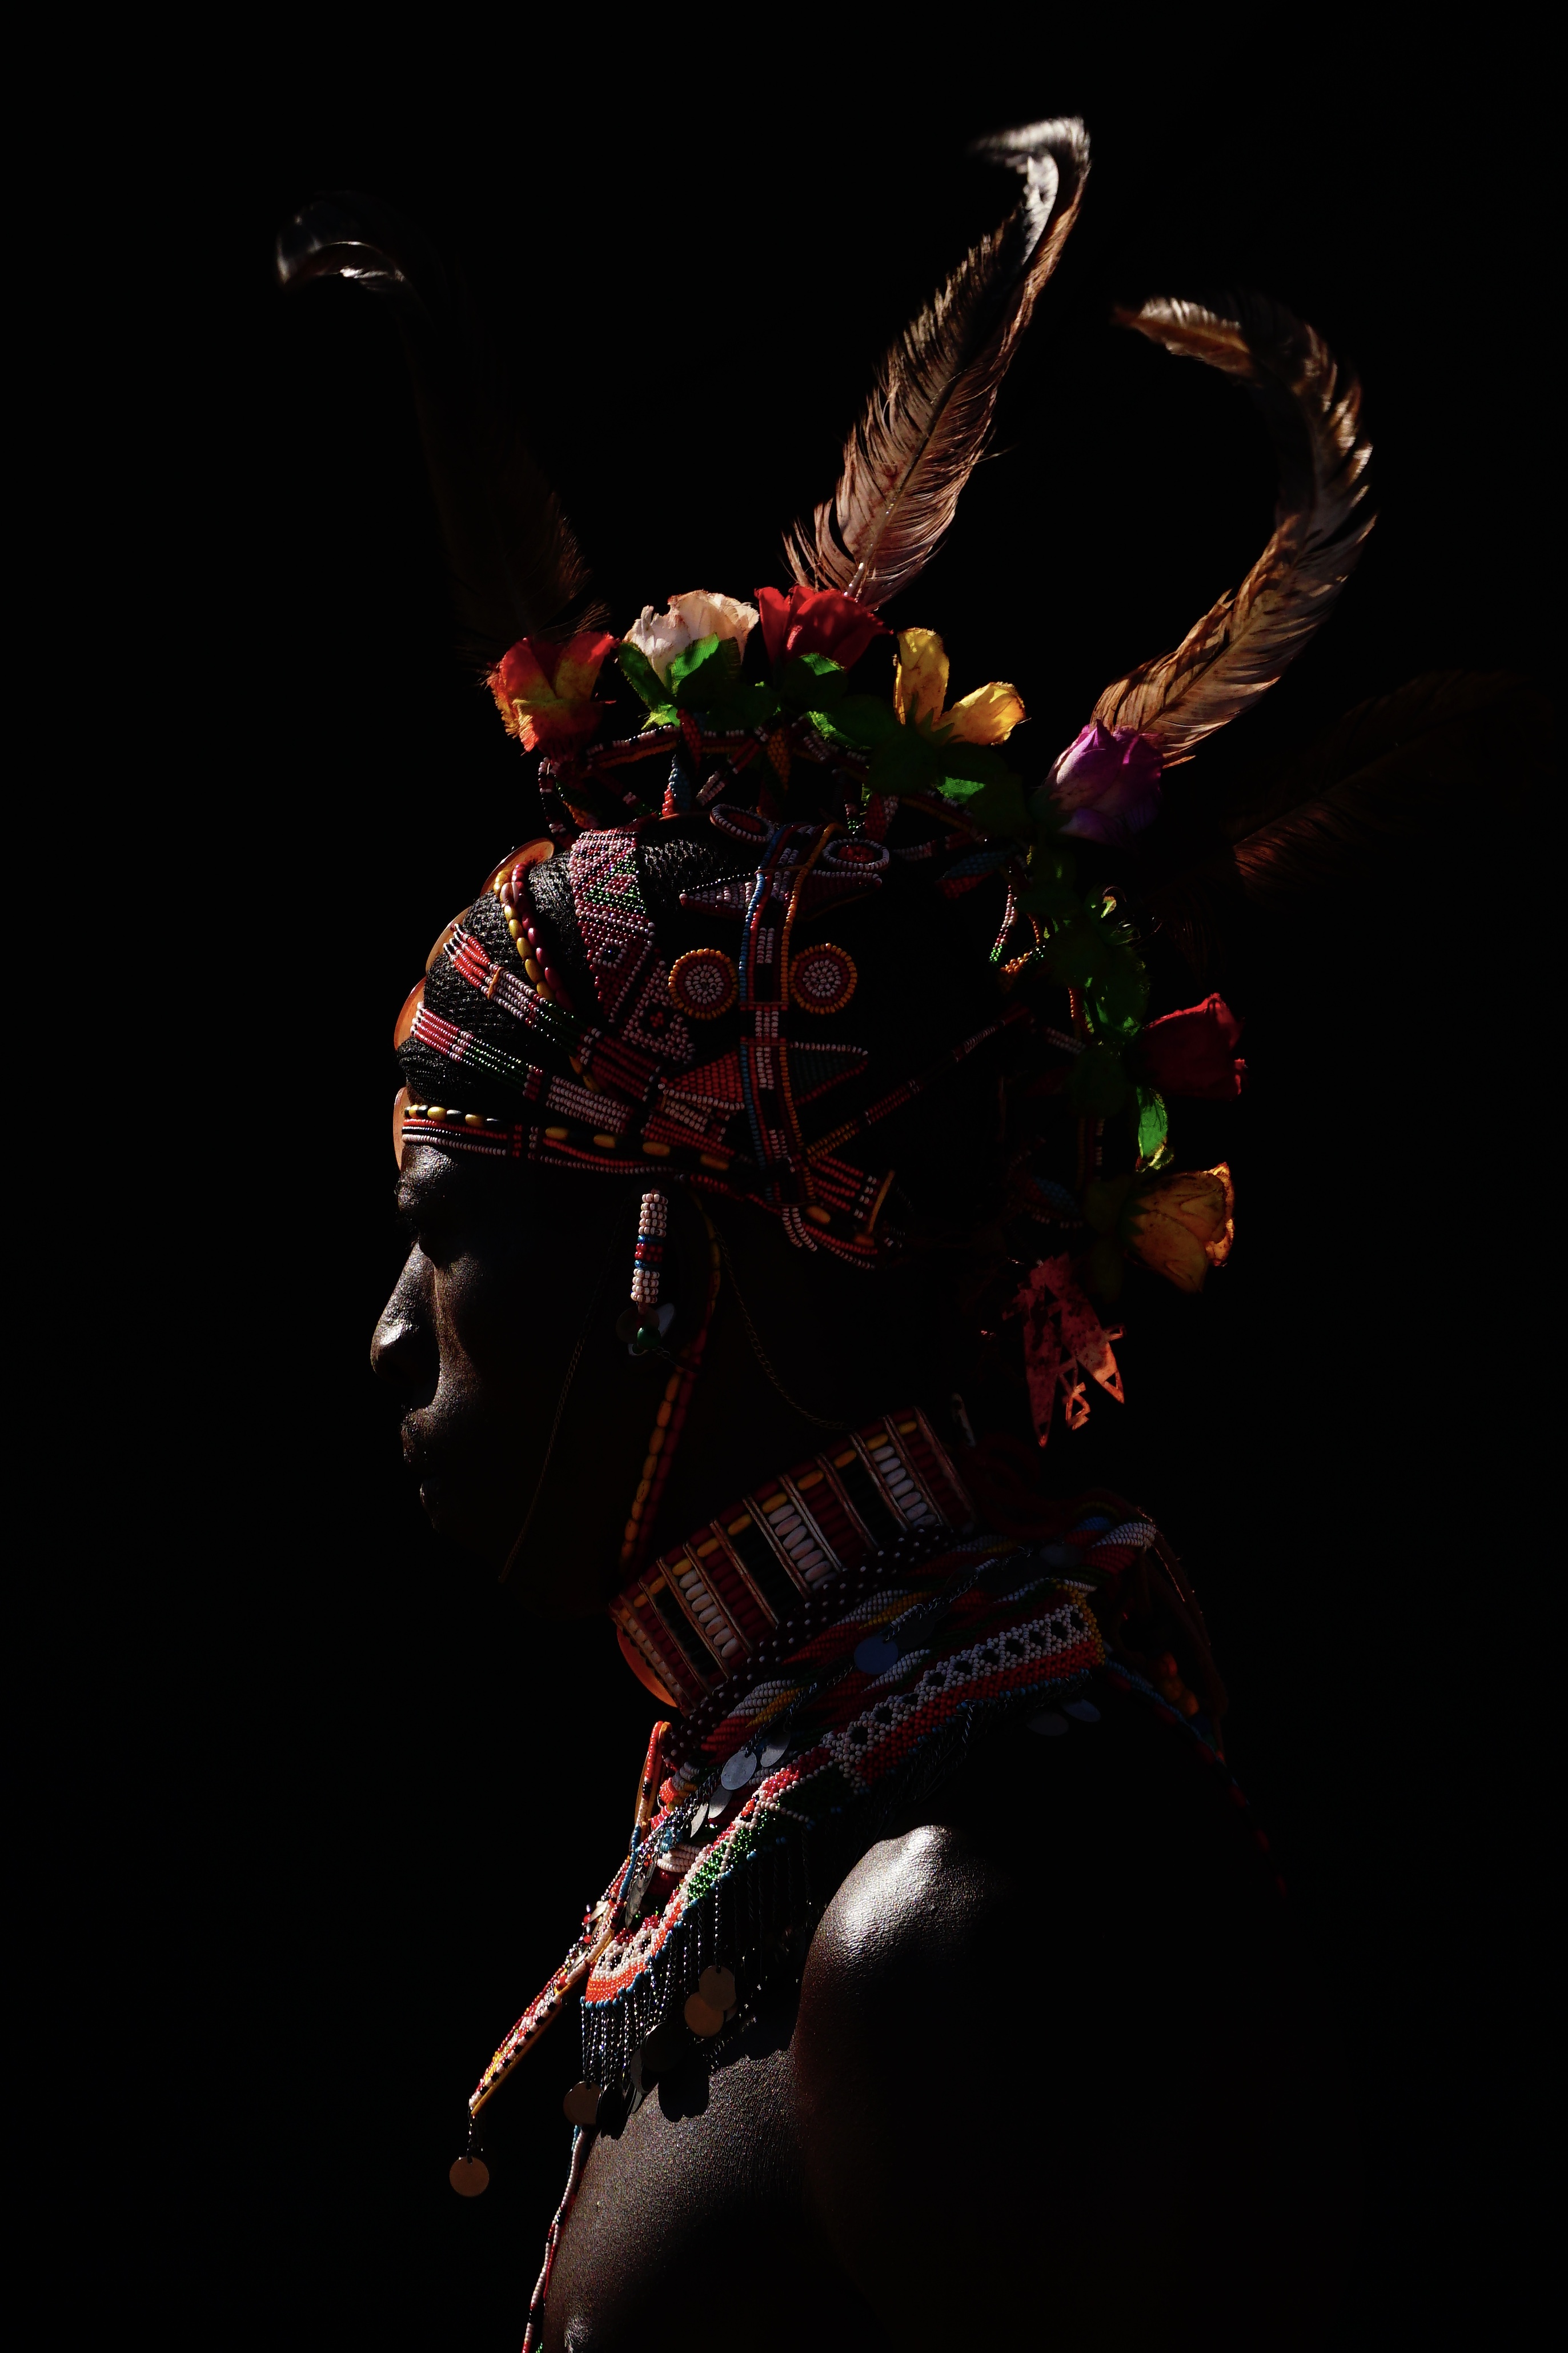 "Samburu Moran", Digital Photograph (11x14)